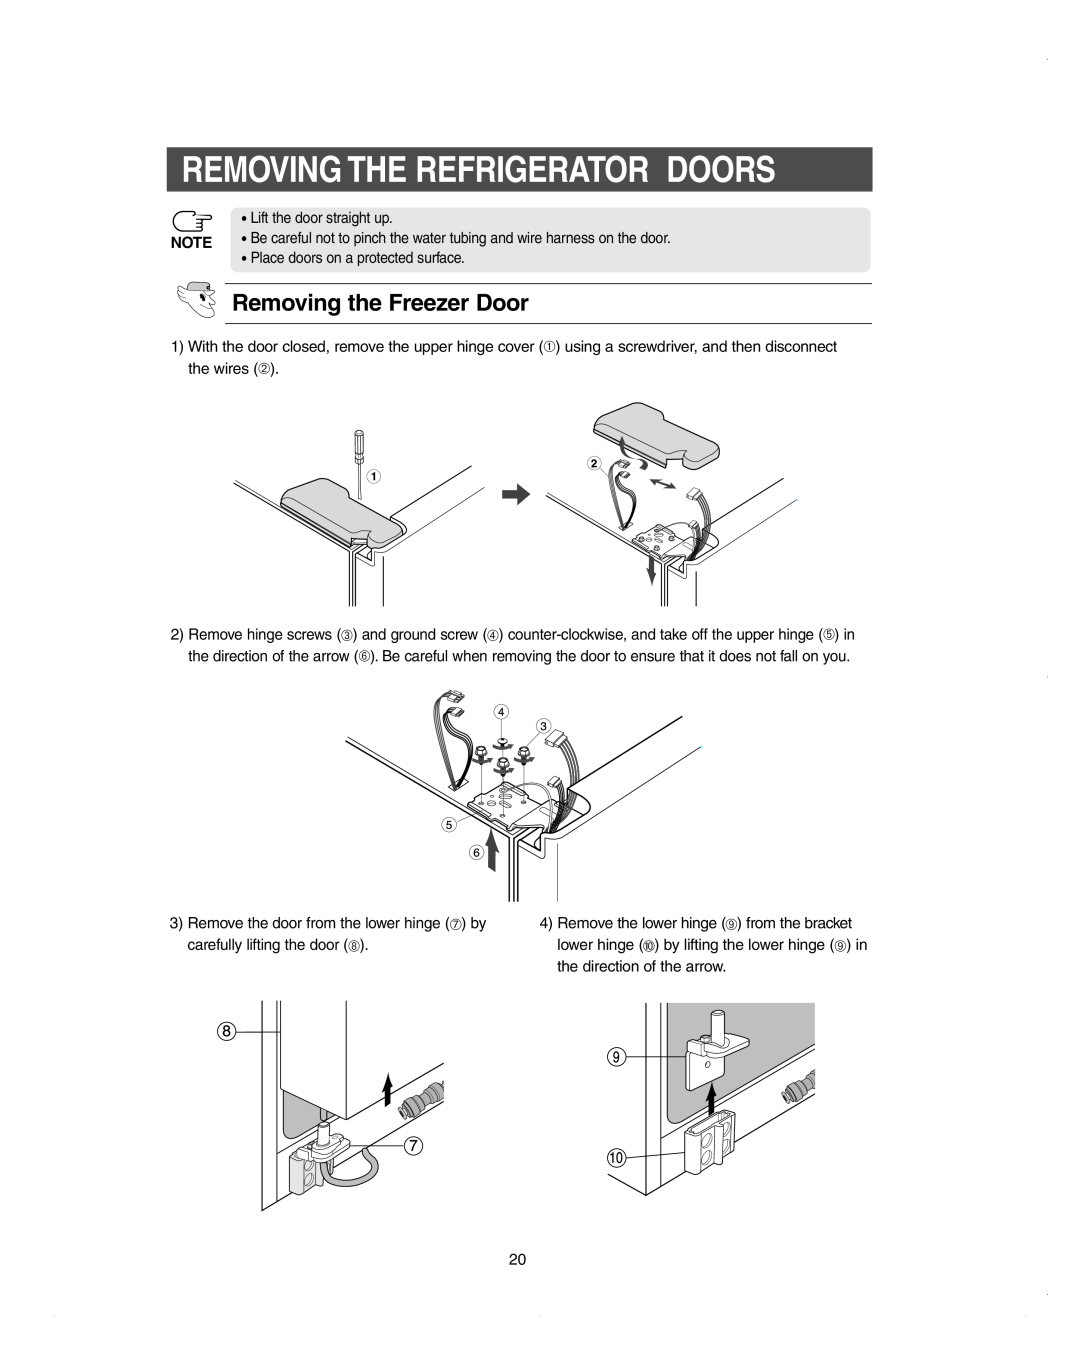 Samsung DA99-01278C owner manual Removing the Freezer Door, Removing The Refrigerator Doors 